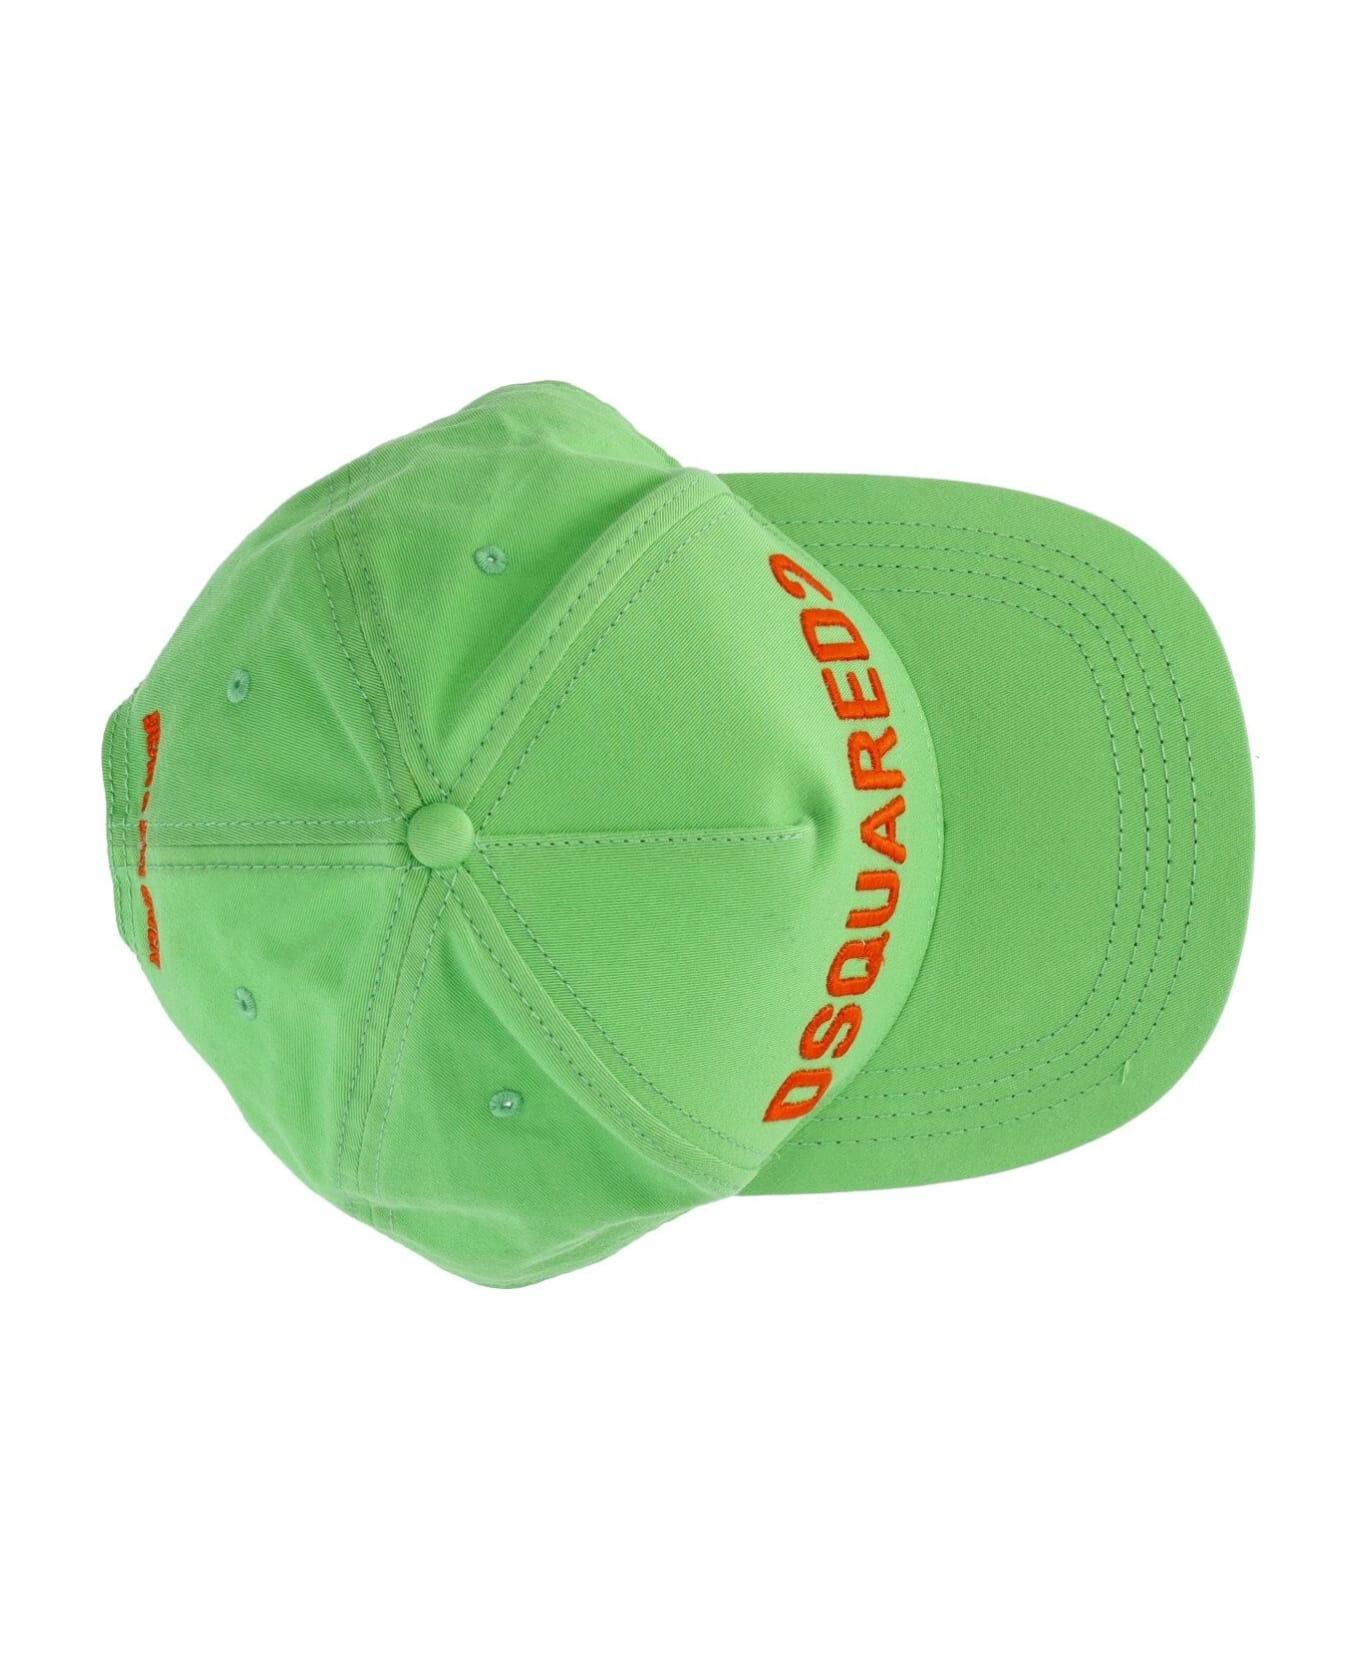 Dsquared2 Technicolor Acid Green Baseball Cap - Verde